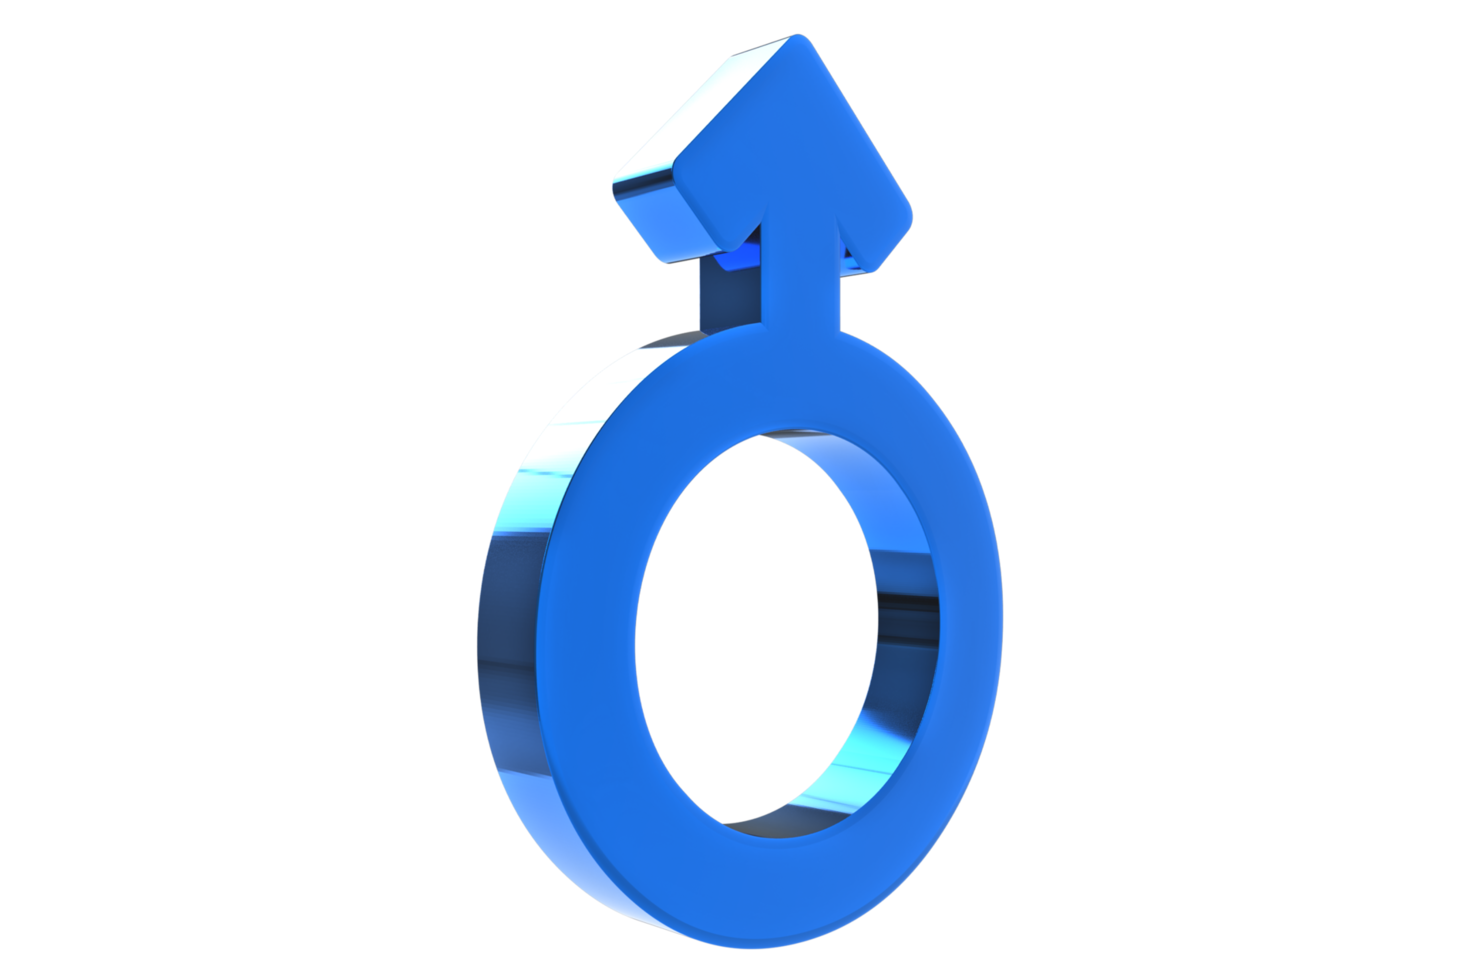 signe de sexe masculin, féminin. illustration de symboles de genre. rendu 3d. symboles de genre 3d png